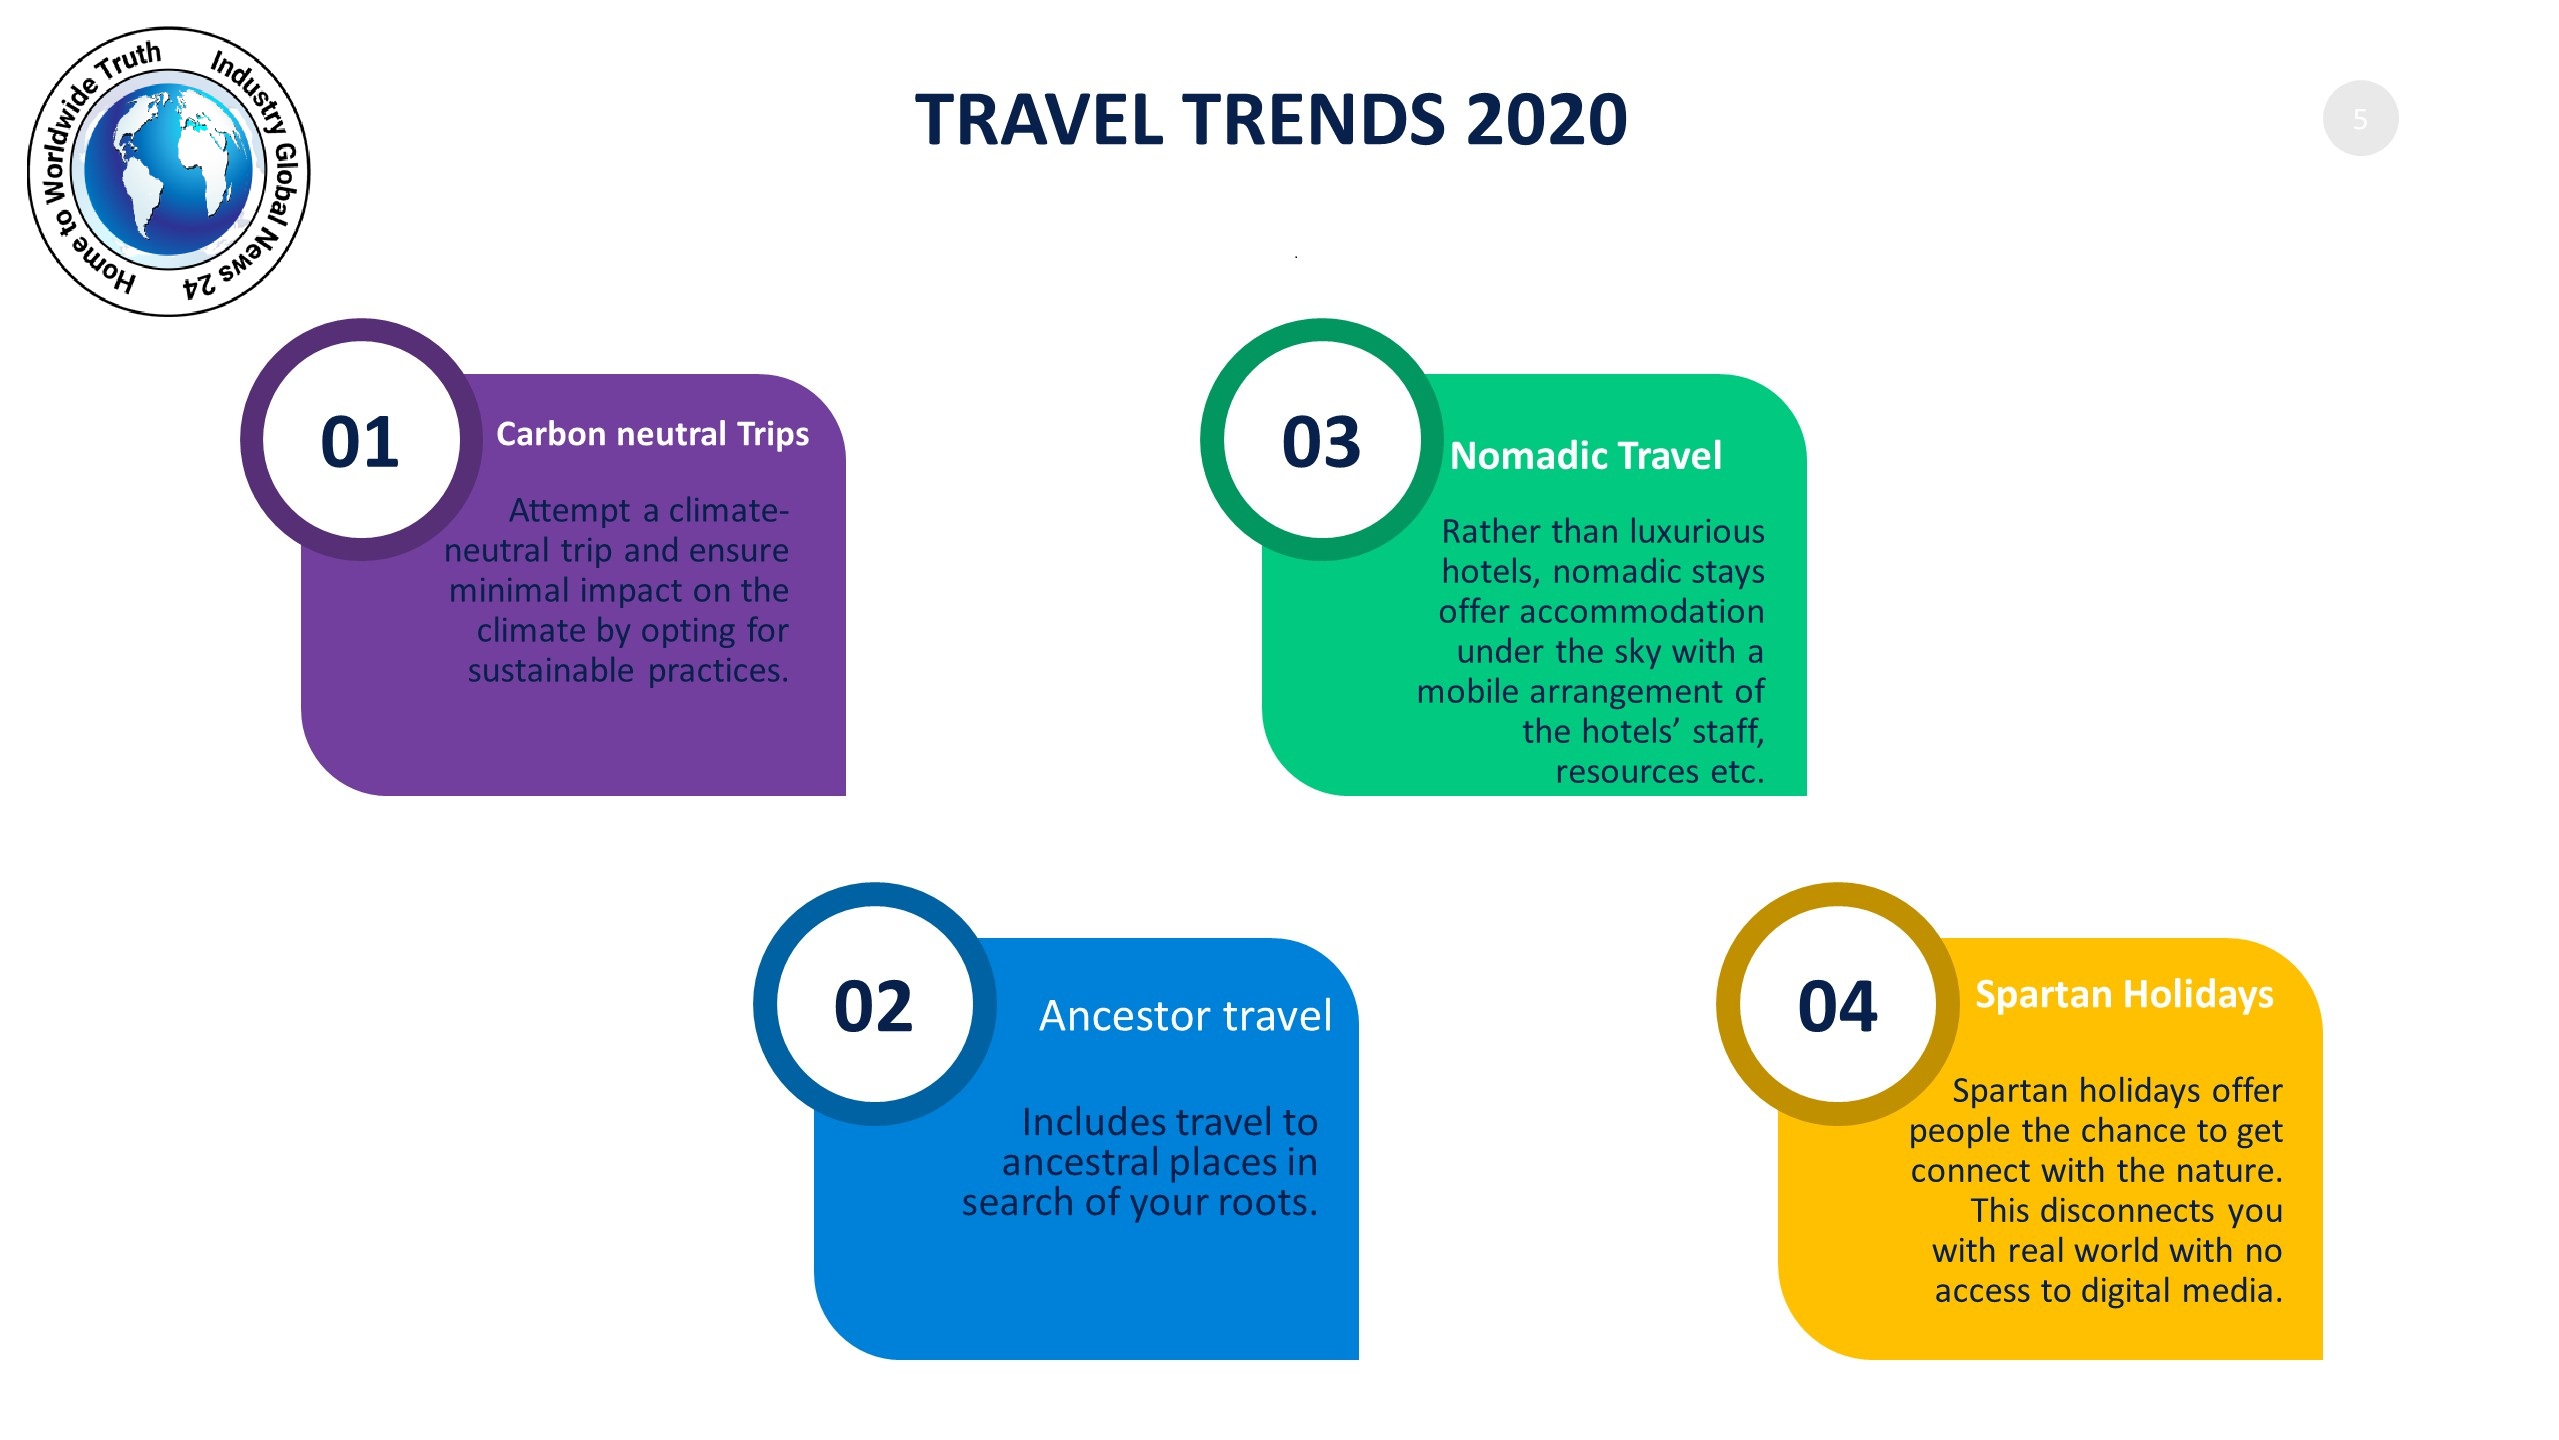 Travel trends 2020